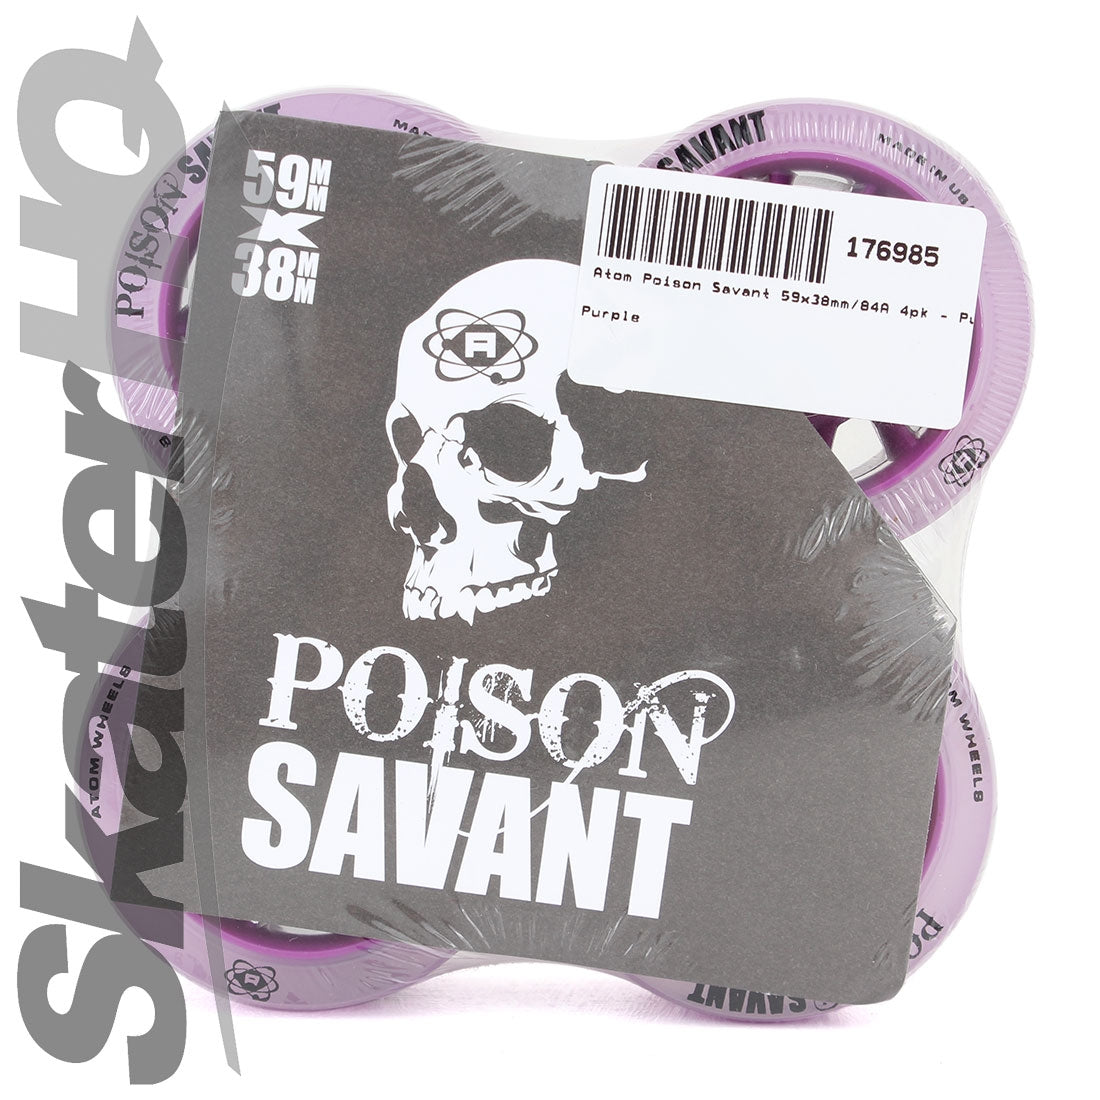 Atom Poison Savant 59x38mm/84A 4pk - Purple Roller Skate Wheels